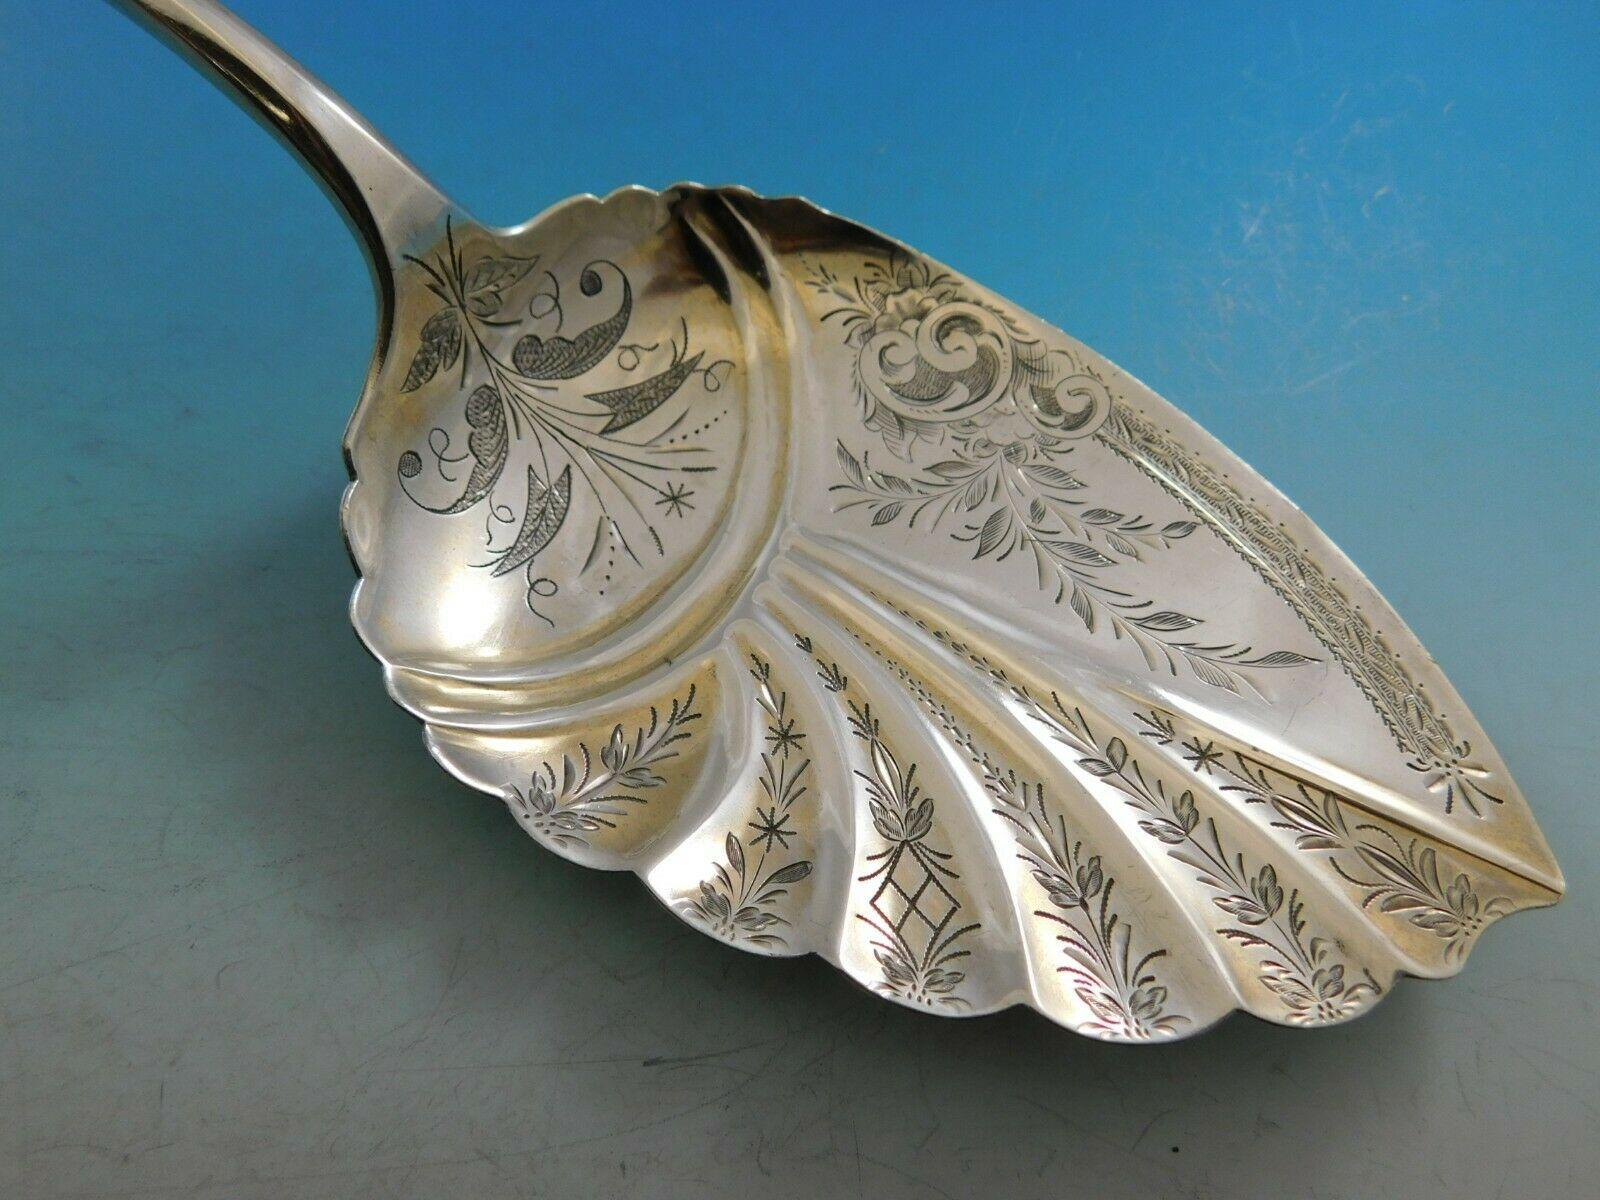 Art silver circa 1860-1883

Interesting sterling silver ice cream server measuring 10 1/8